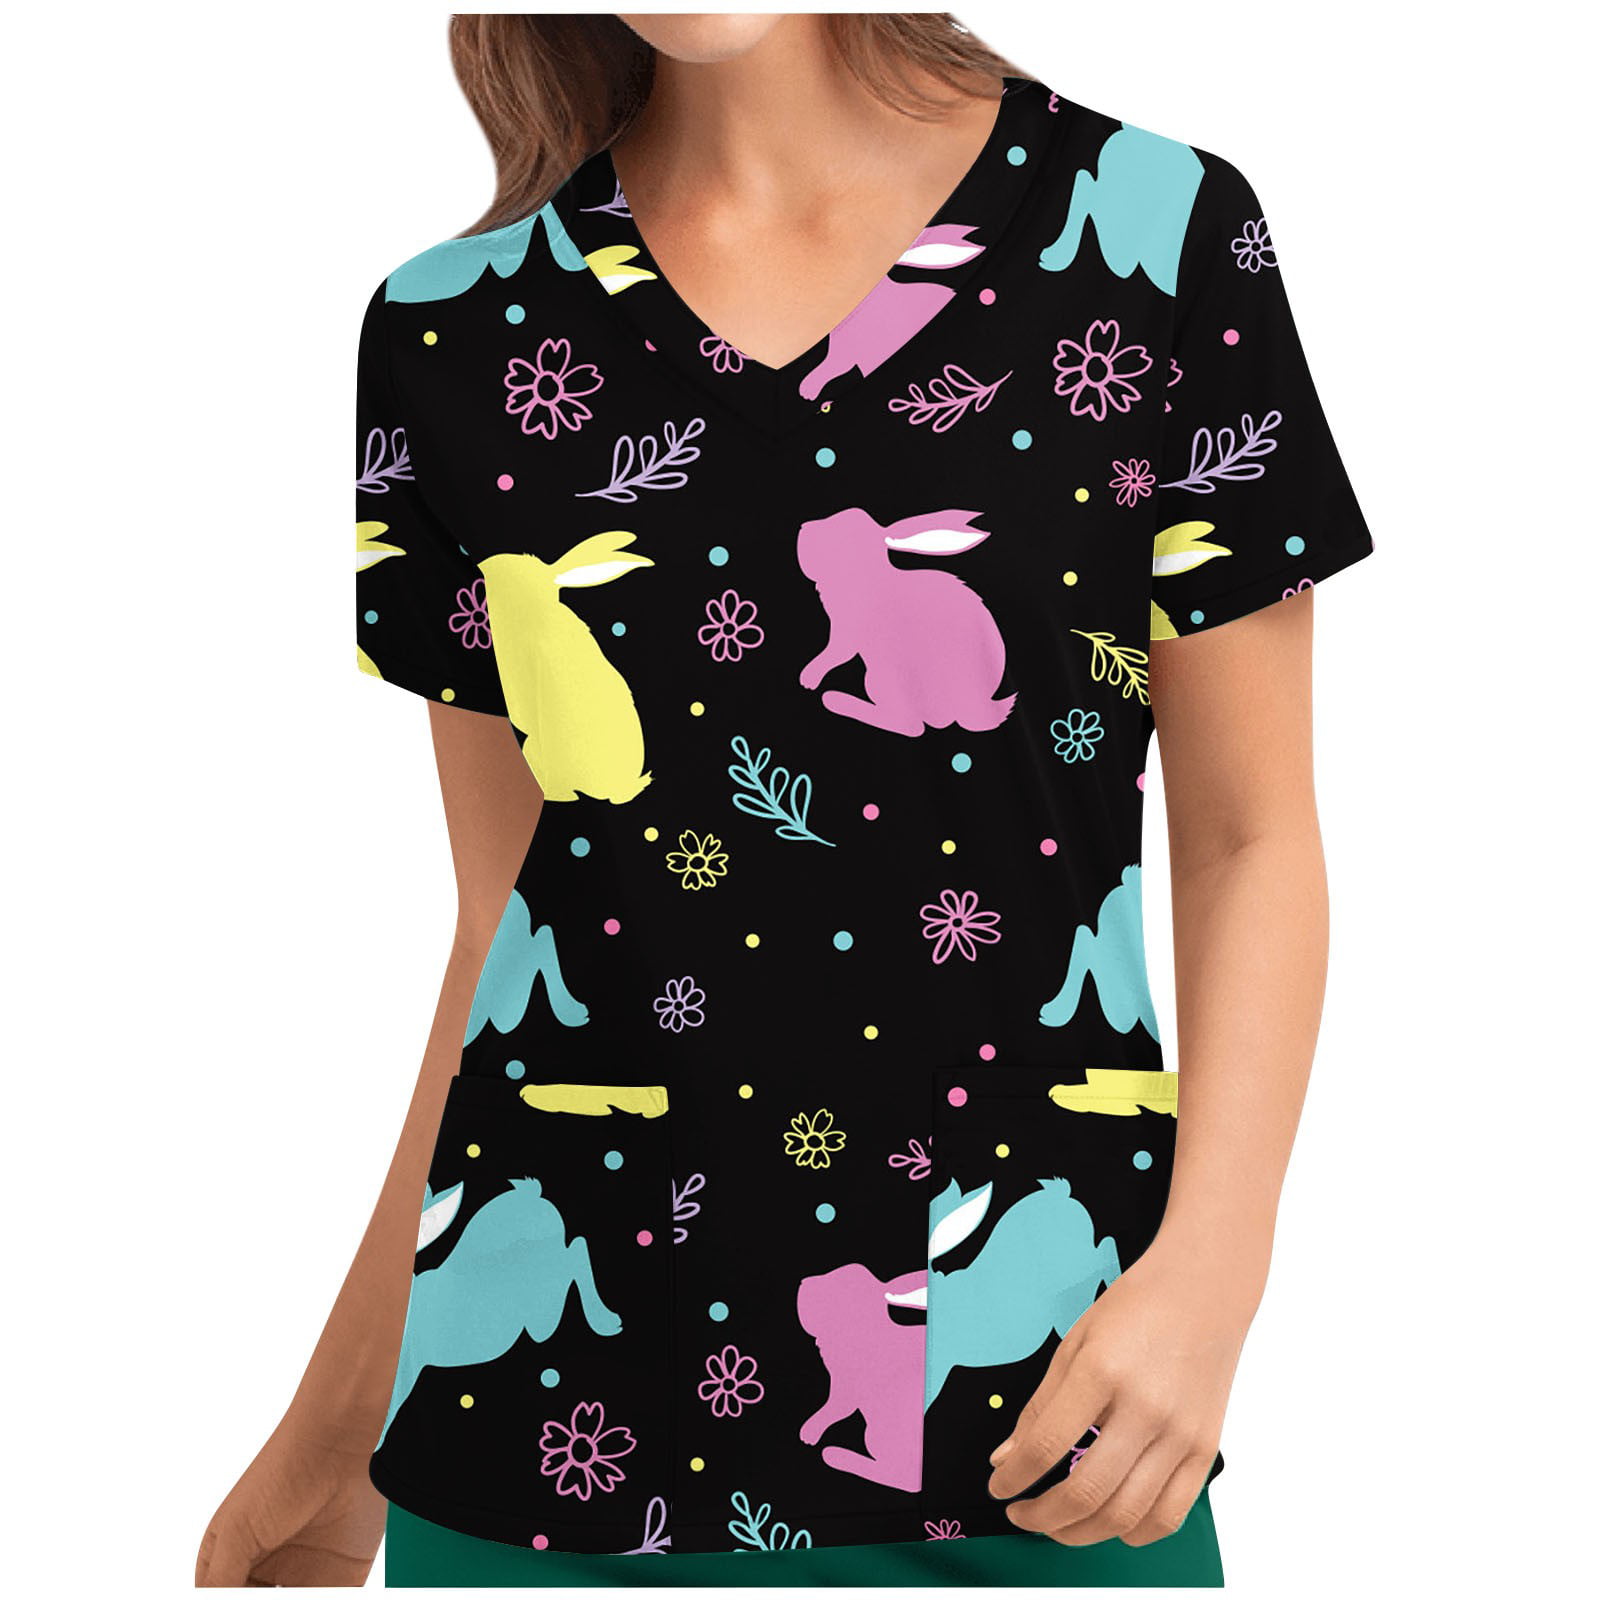 4th of july scrubs for women Cartoon Animal Print Scrub Shirt Tops Short  Sleeve v Neck Working Uniform Medical Workwear with Pocket 